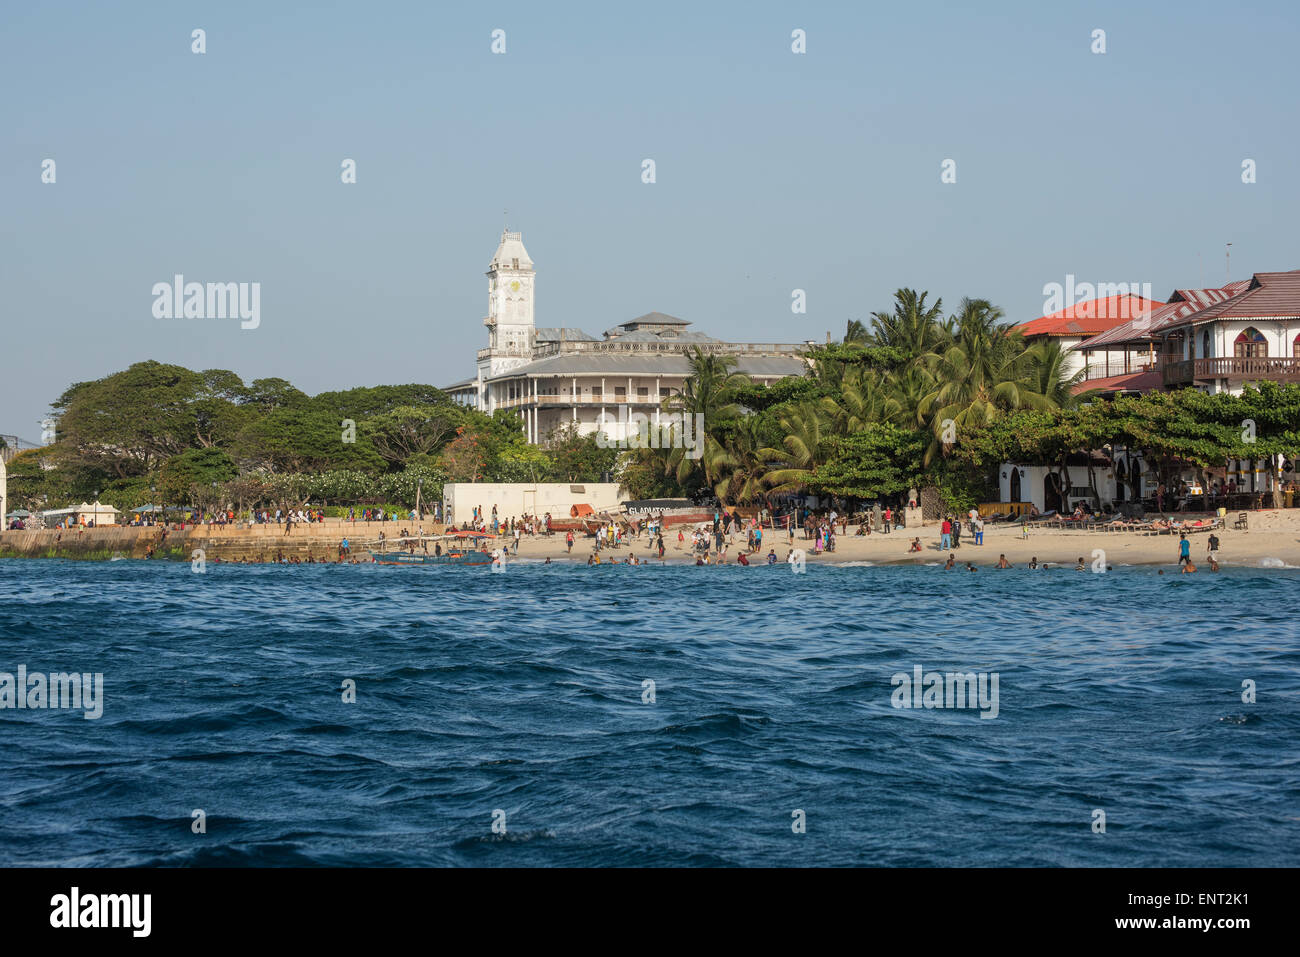 View from the sea to the town, beach and the House of Wonders, Stone Town, Zanzibar, Unguja, Zanzibar Archipelago, Tanzania Stock Photo